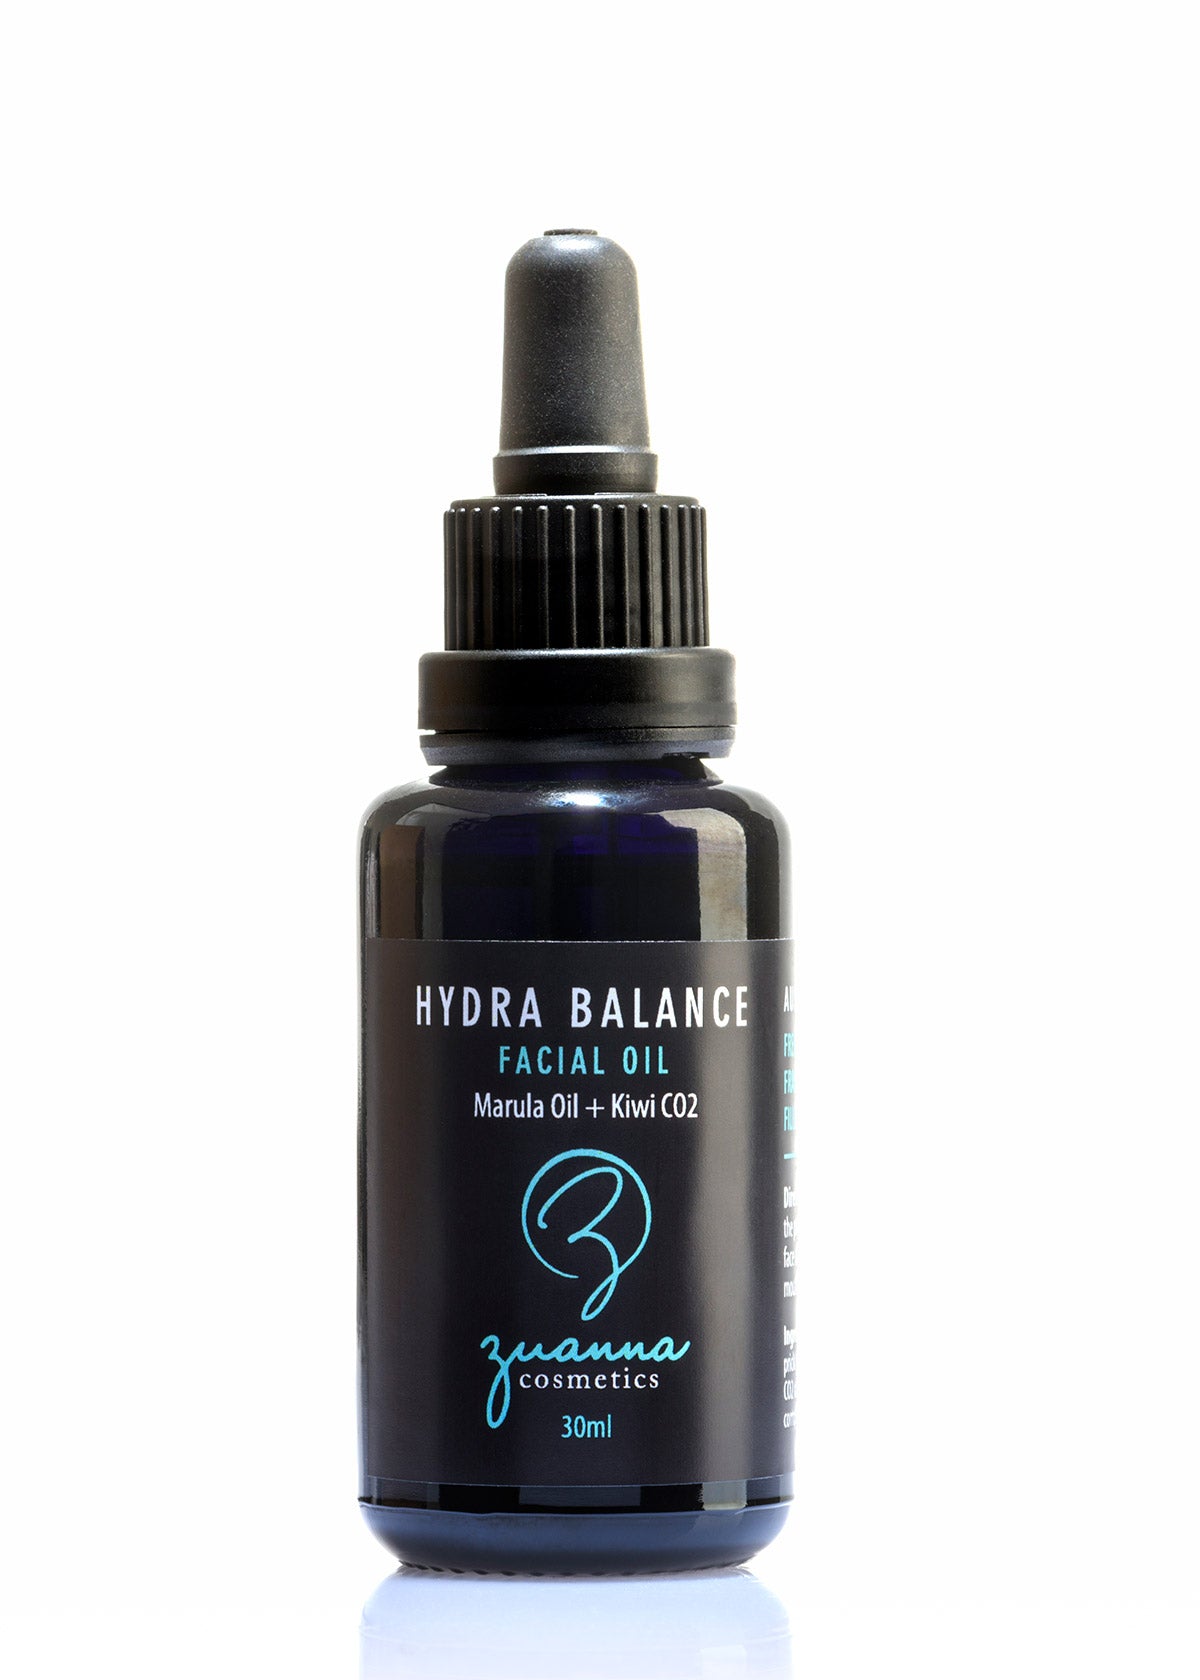 Hydra-Balance Facial Oil - Zuanna 